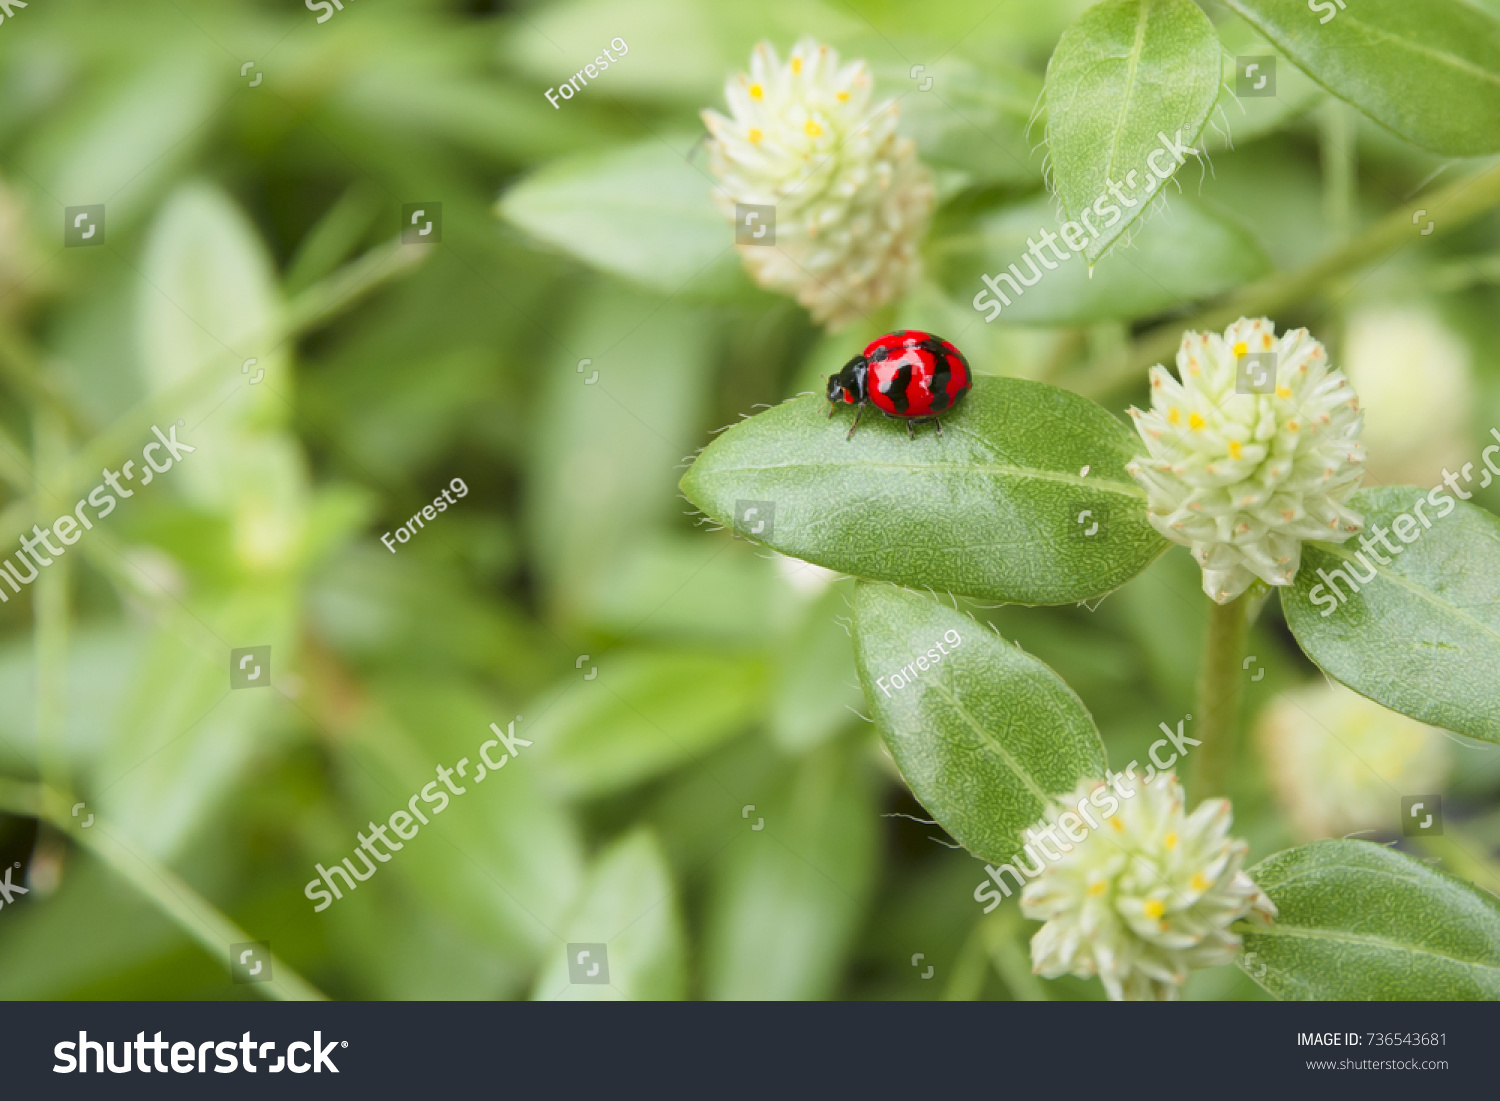 Red beetle (Ladybird beetles) on grass flower in the garden. #736543681